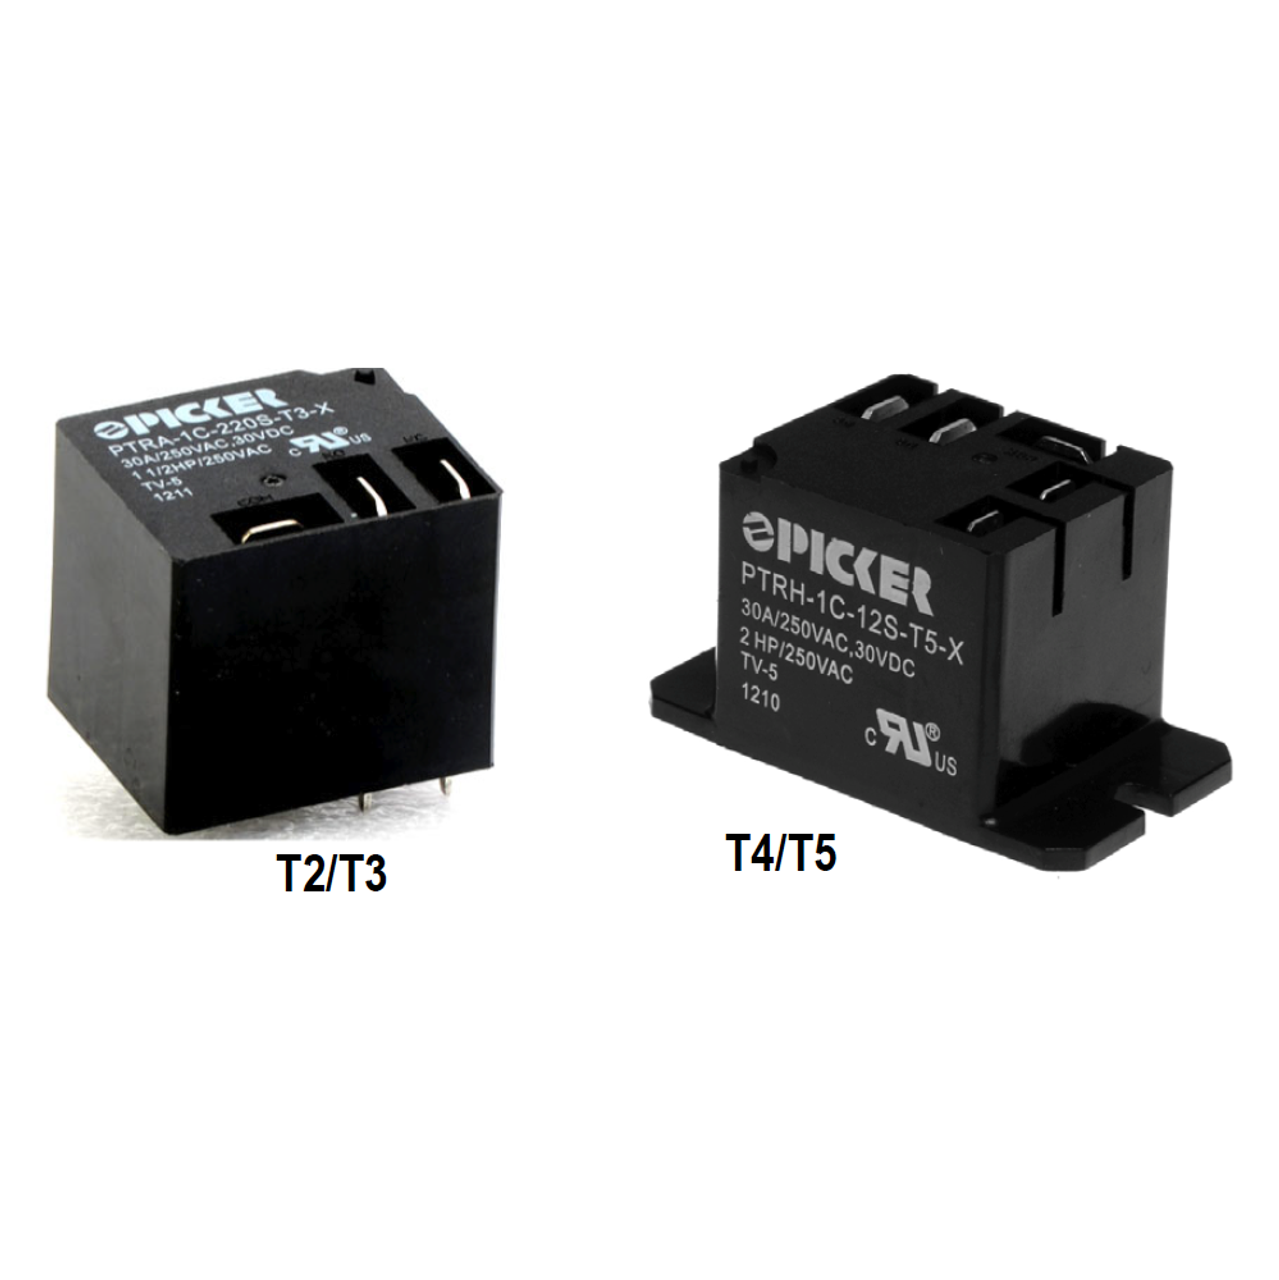 Picker PTRH-1C-110SF-T3-X67 Power Relays